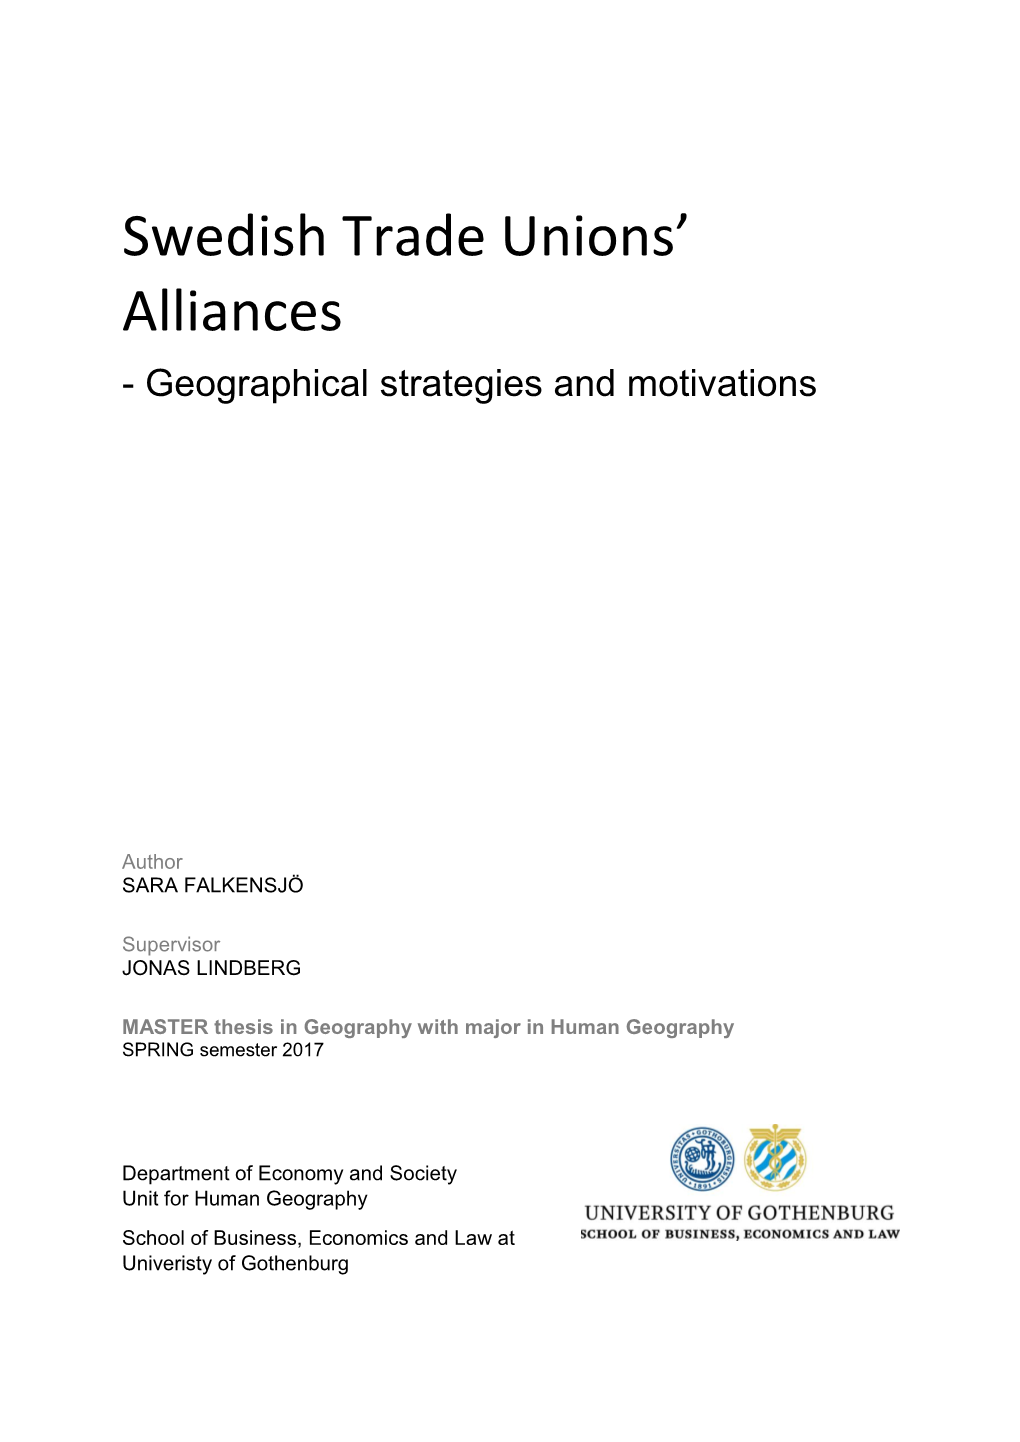 Swedish Trade Unions' Alliances